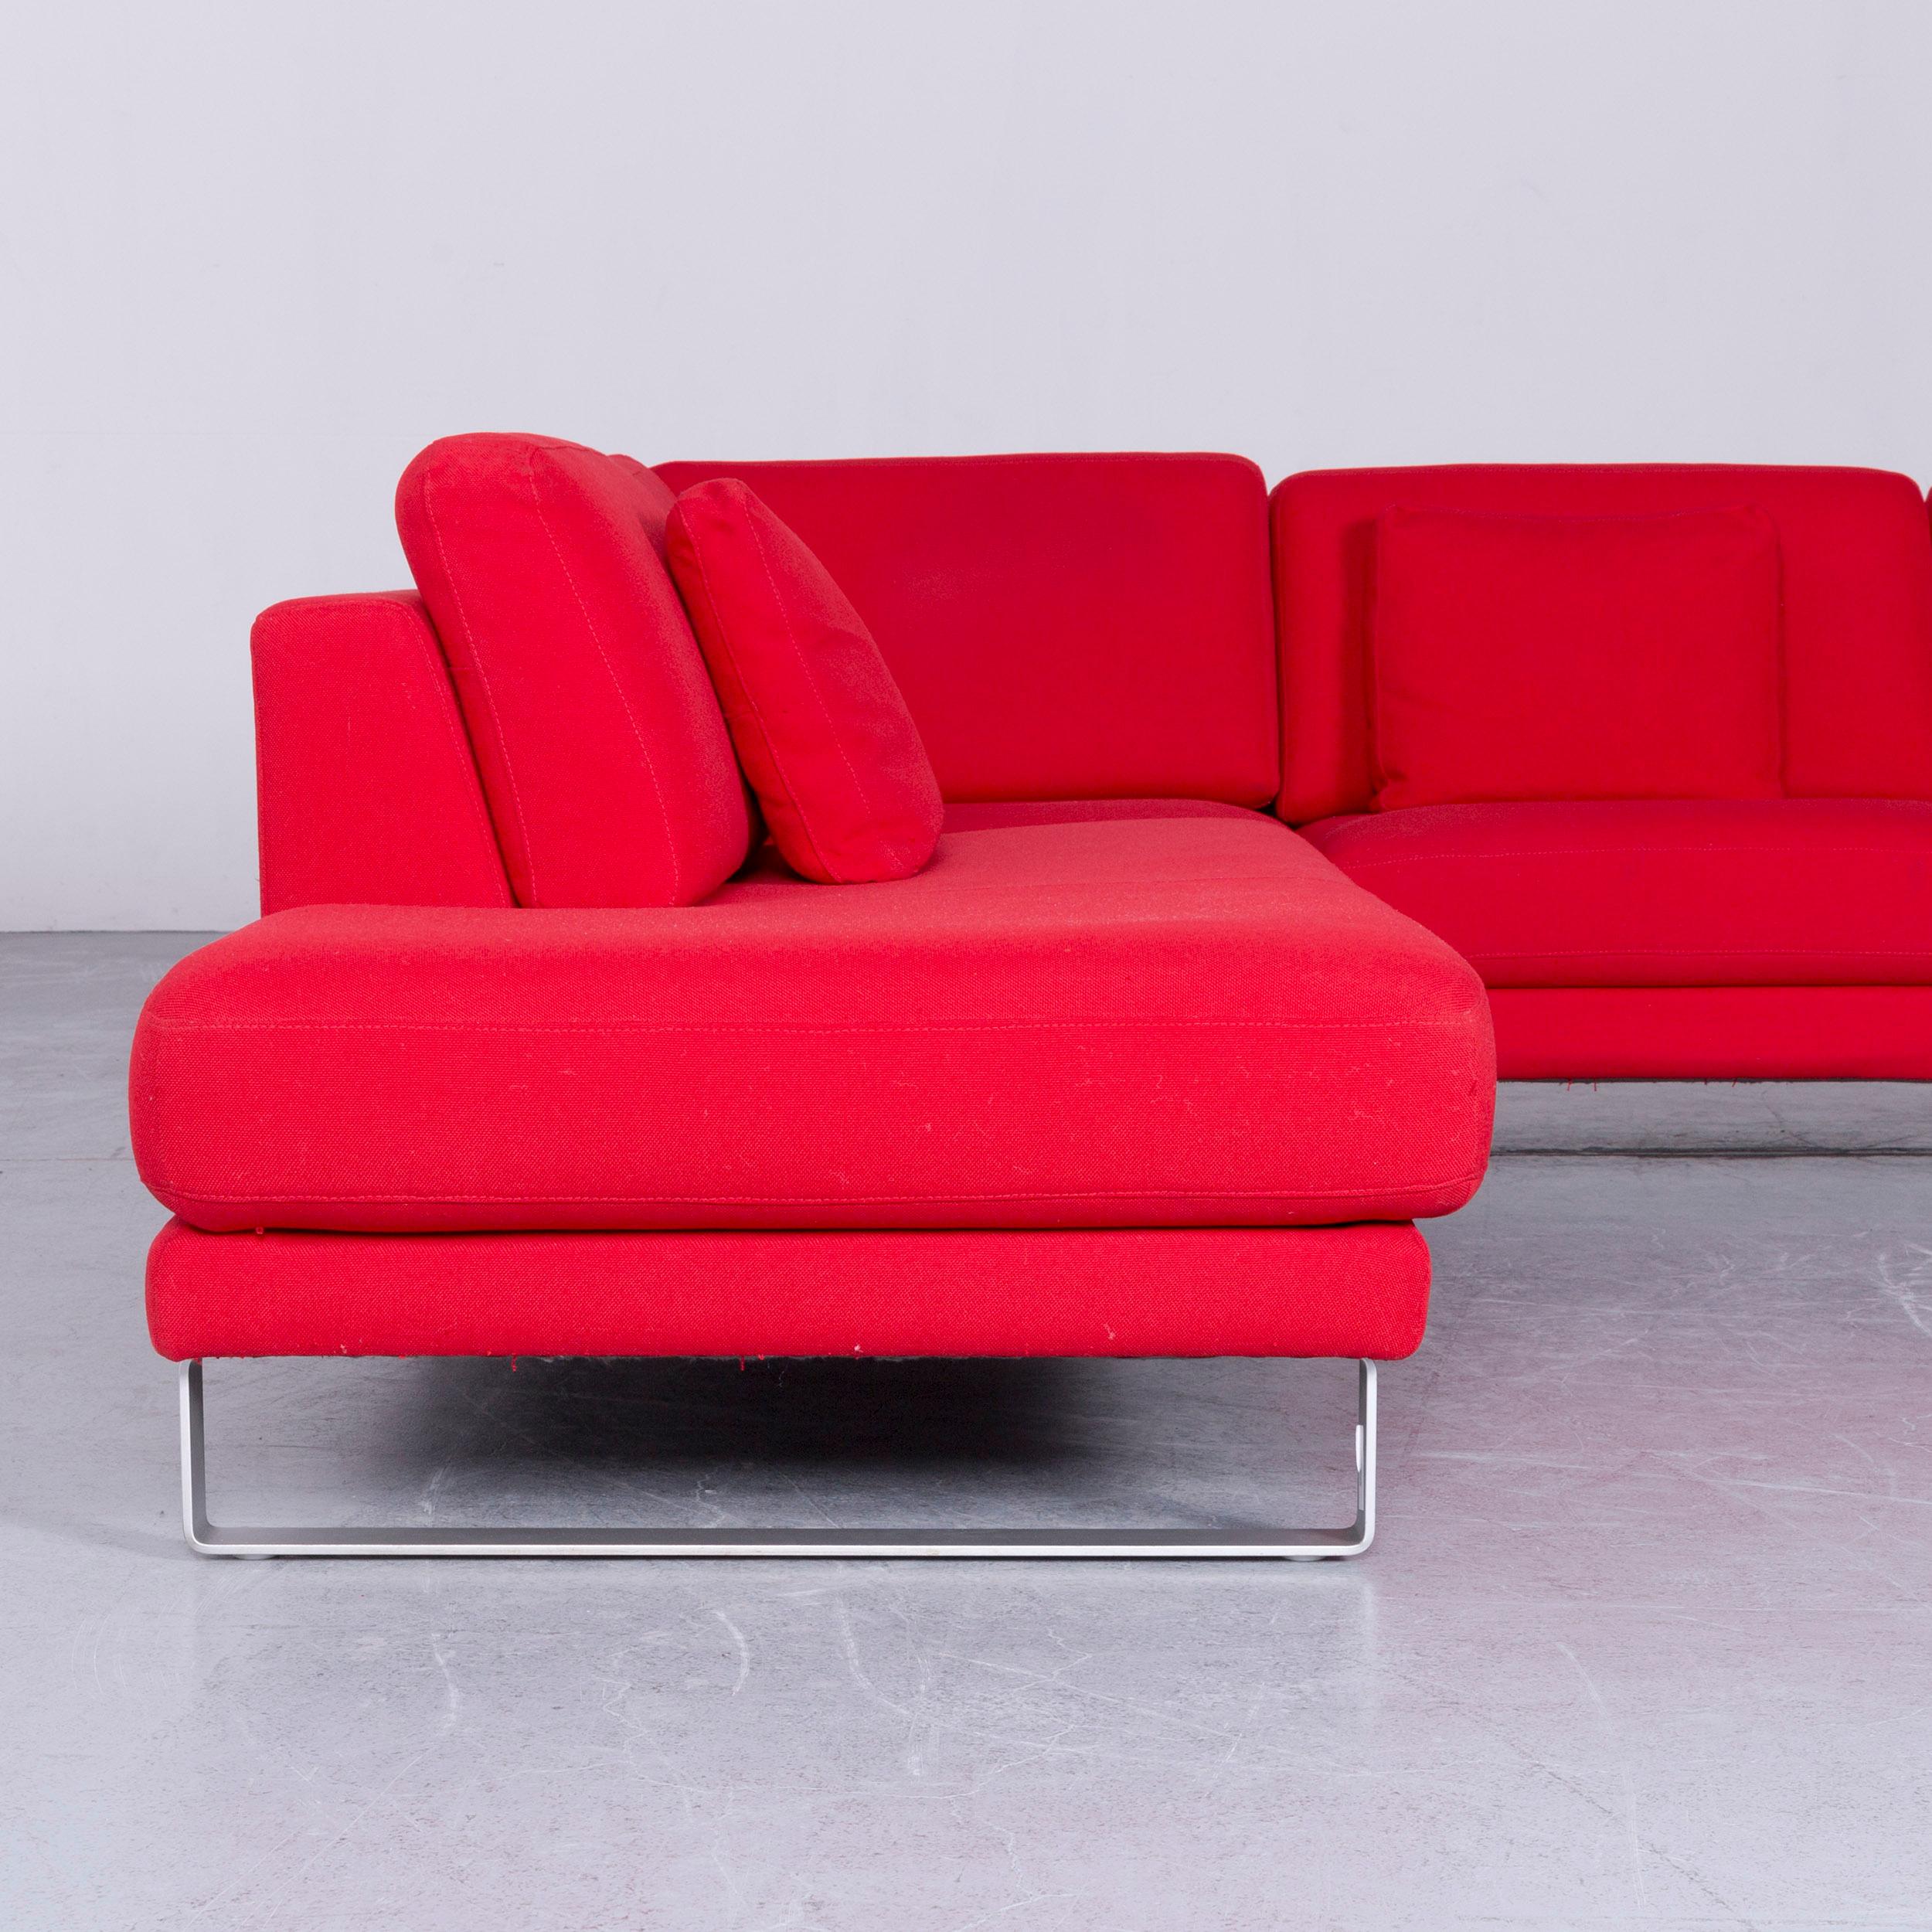 Rolf Benz Designer Ego Fabricr Corner-Sofa Red Four-Seat Couch For Sale 3